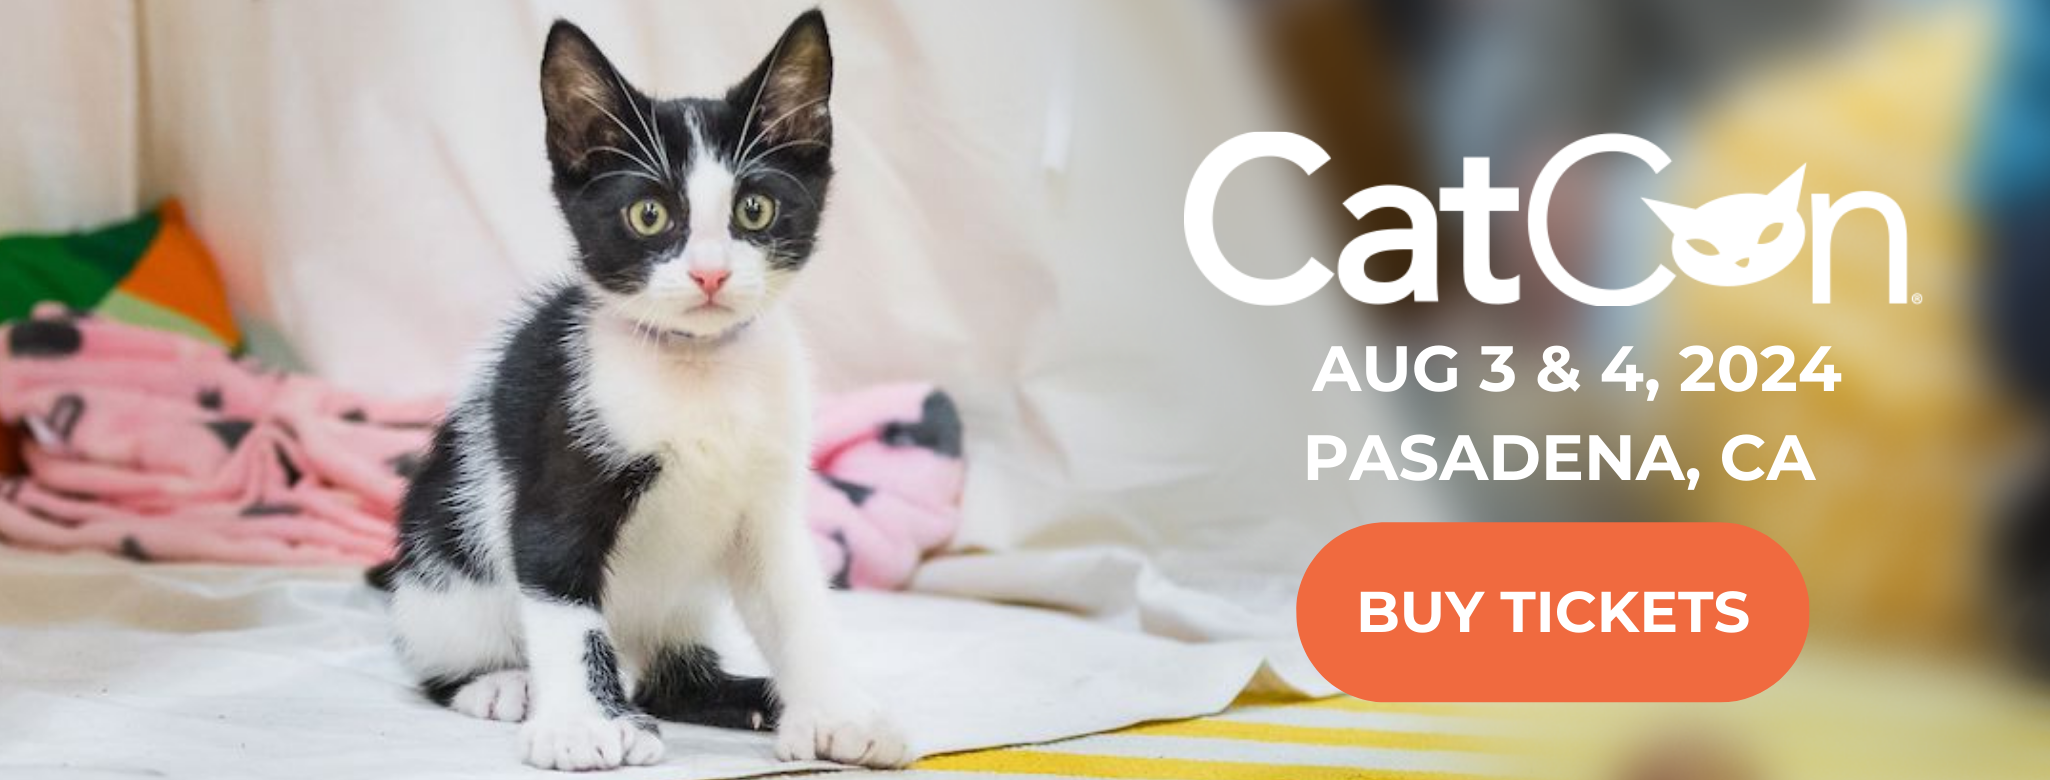 Adoptable kitten at CatCon. BUY CATCON 2024 TICKETS NOW!